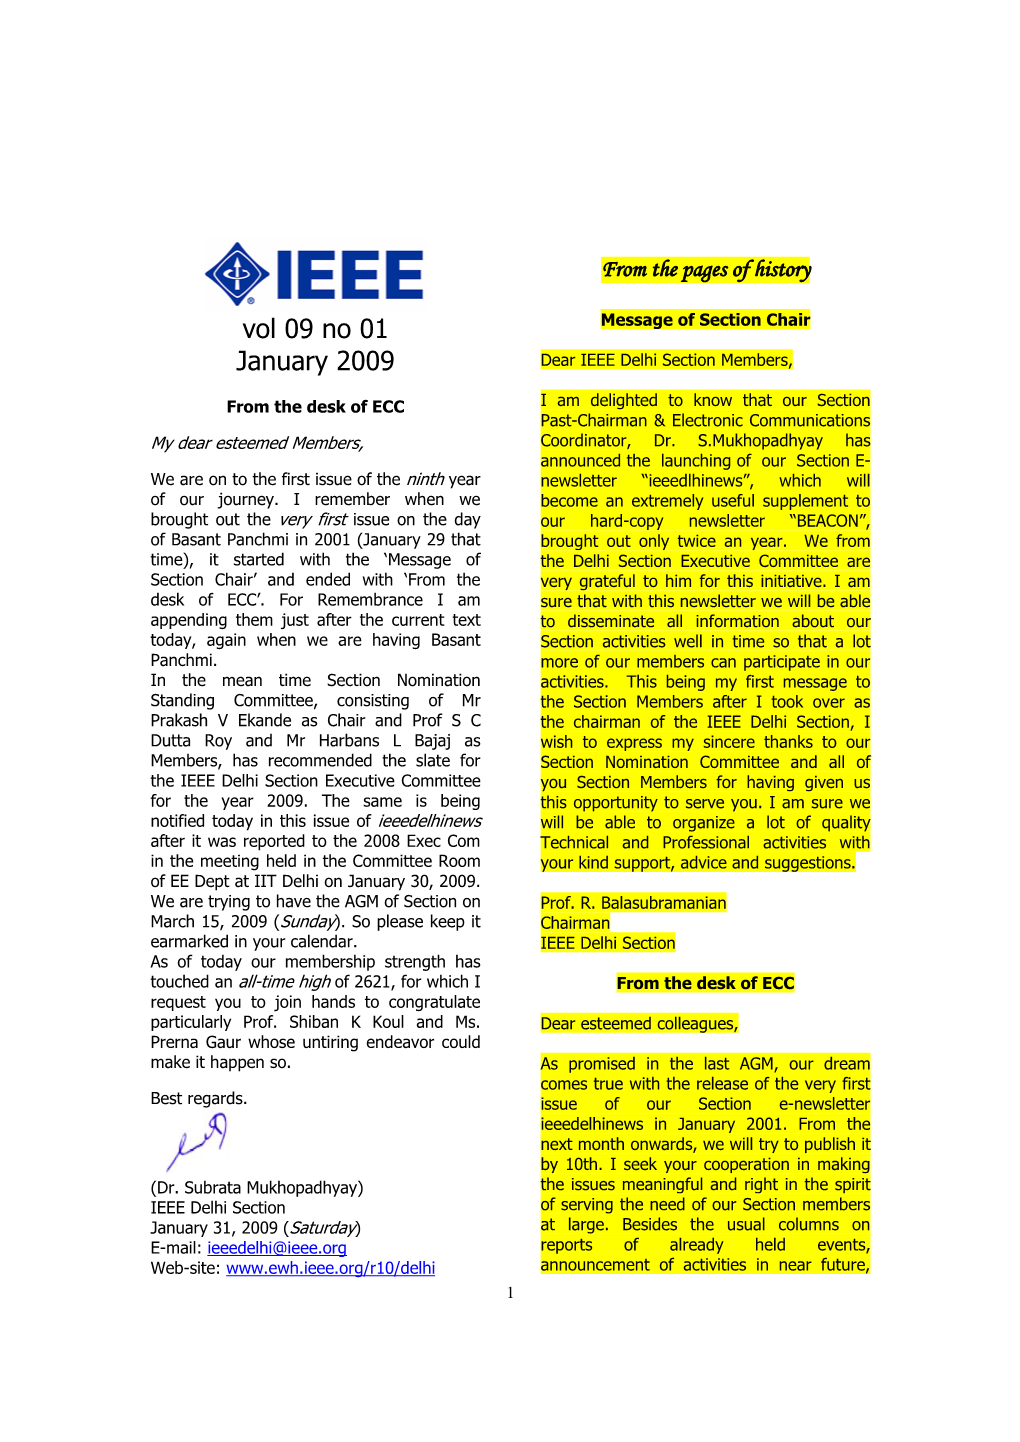 Vol 09 No 01 January 2009 Dear IEEE Delhi Section Members